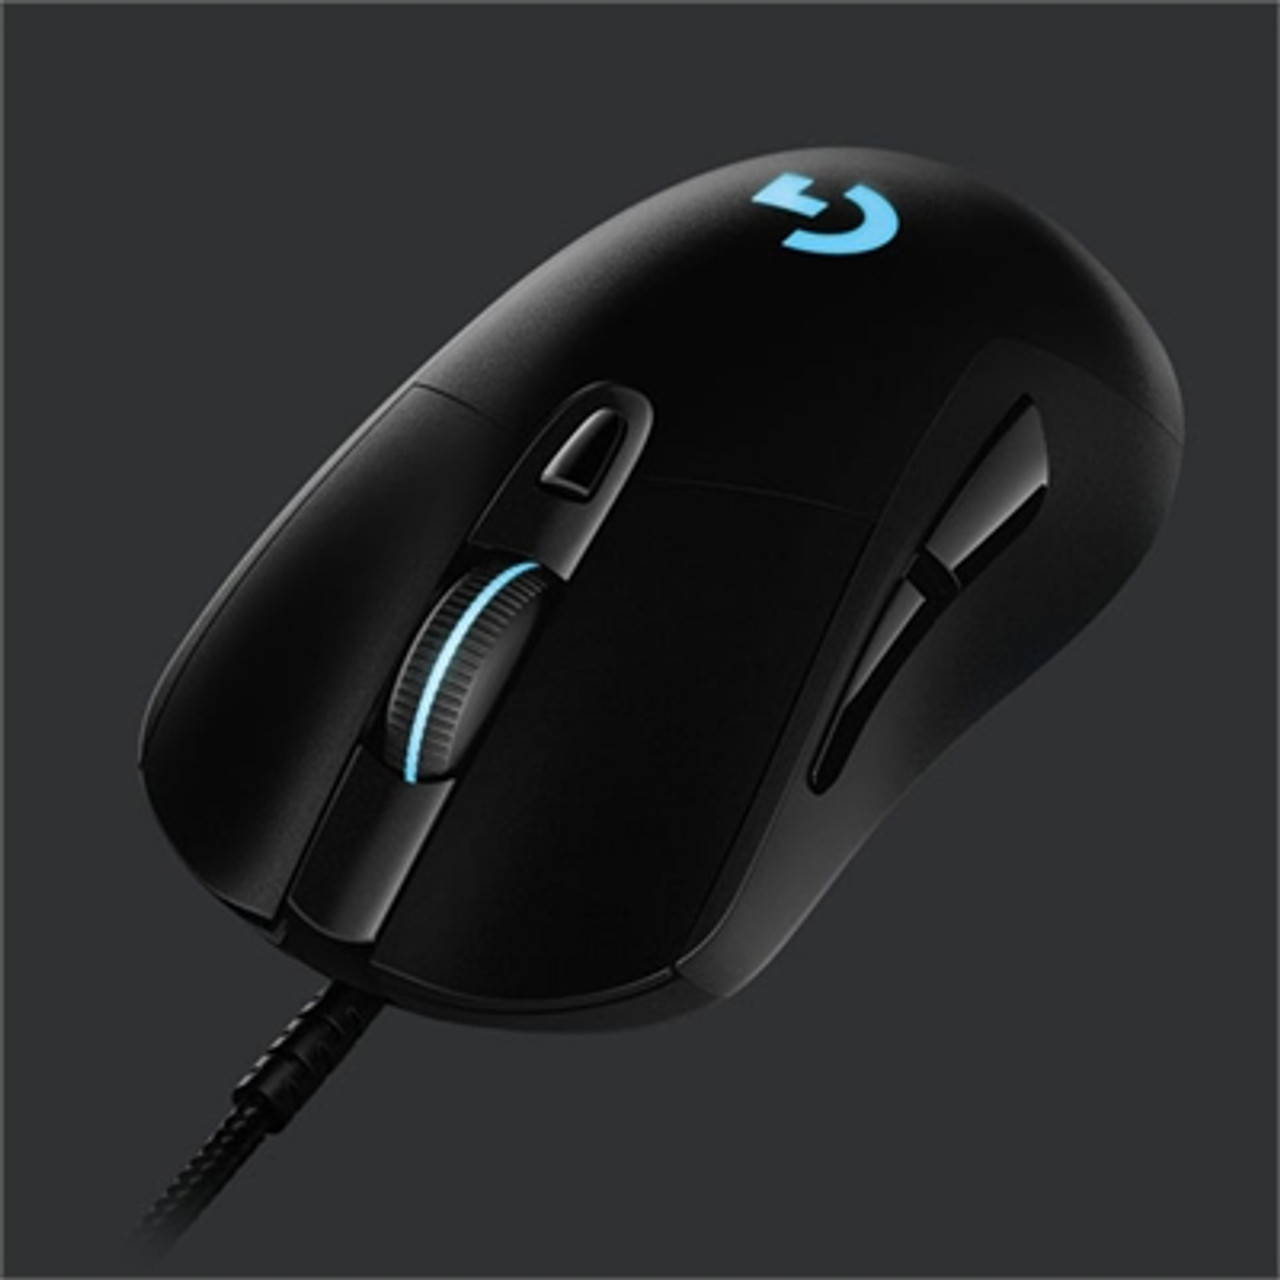 Logitech 910-005630 G403 HERO Gaming Mouse 